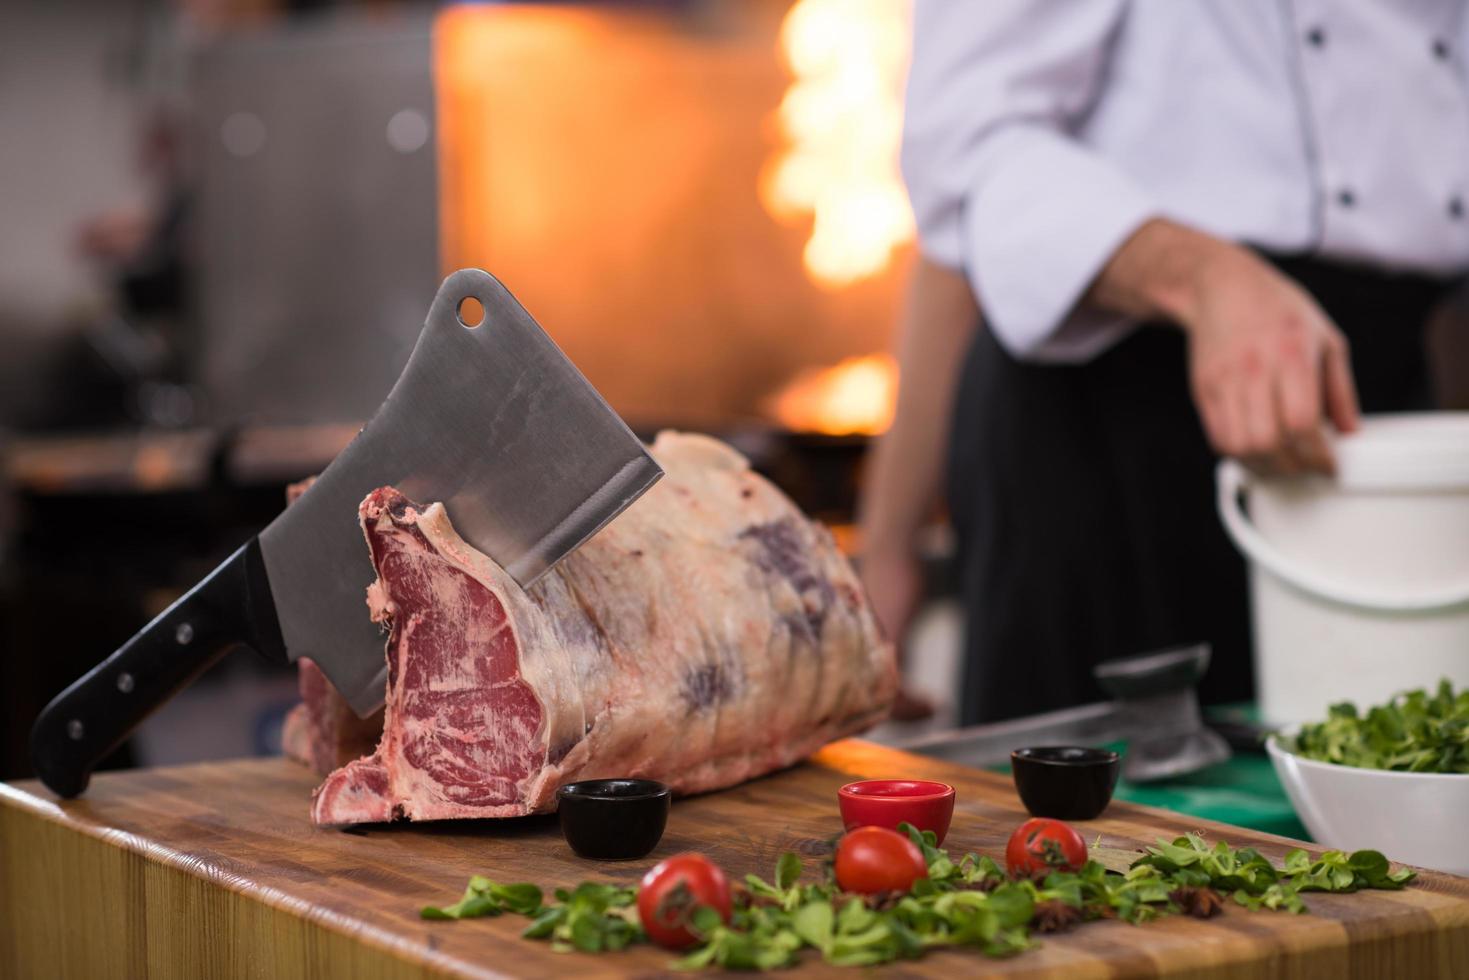 chef cortando un gran trozo de carne foto